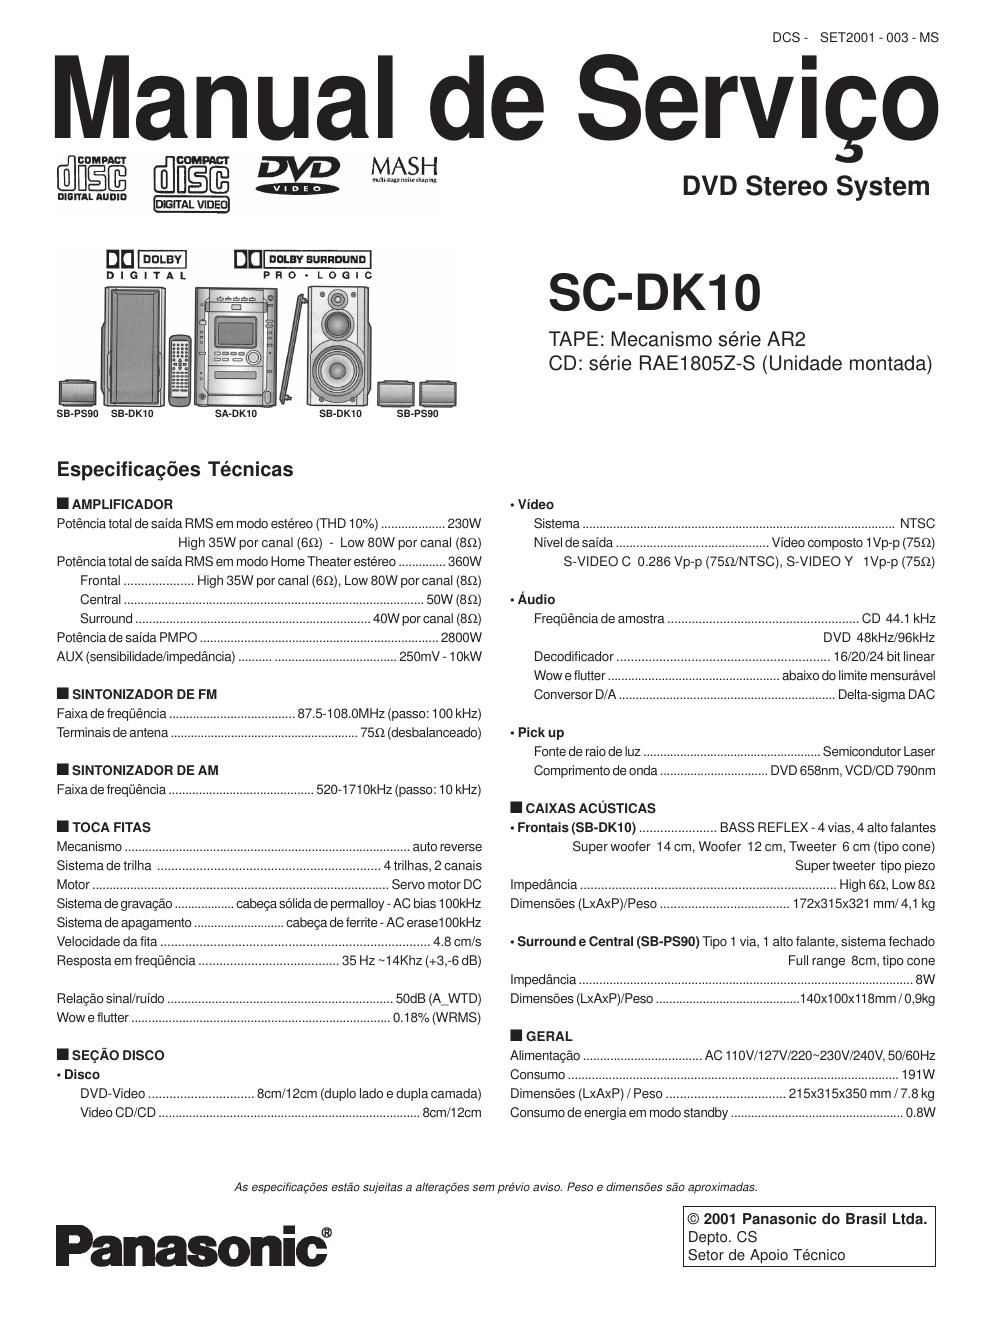 panasonic sc dk 10 service manual